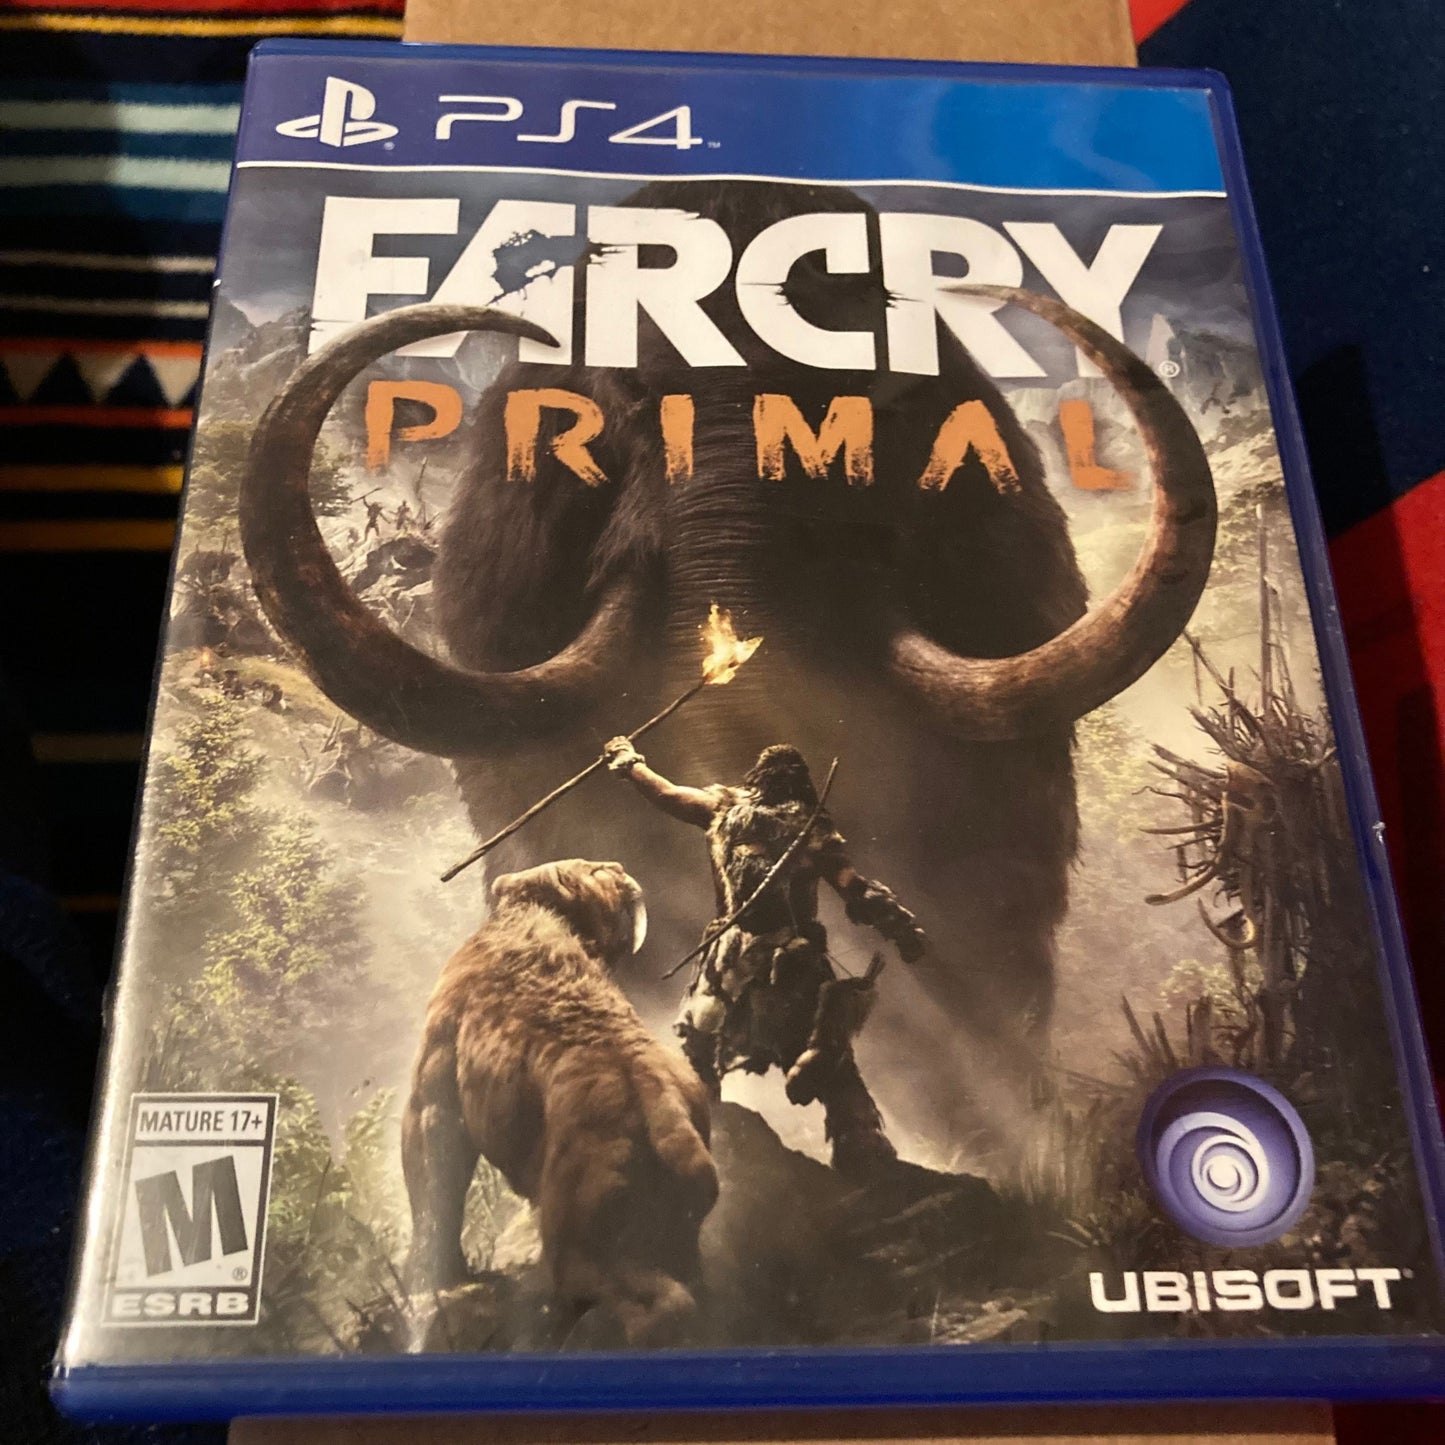 PS4 - Far Cry 4: Primal